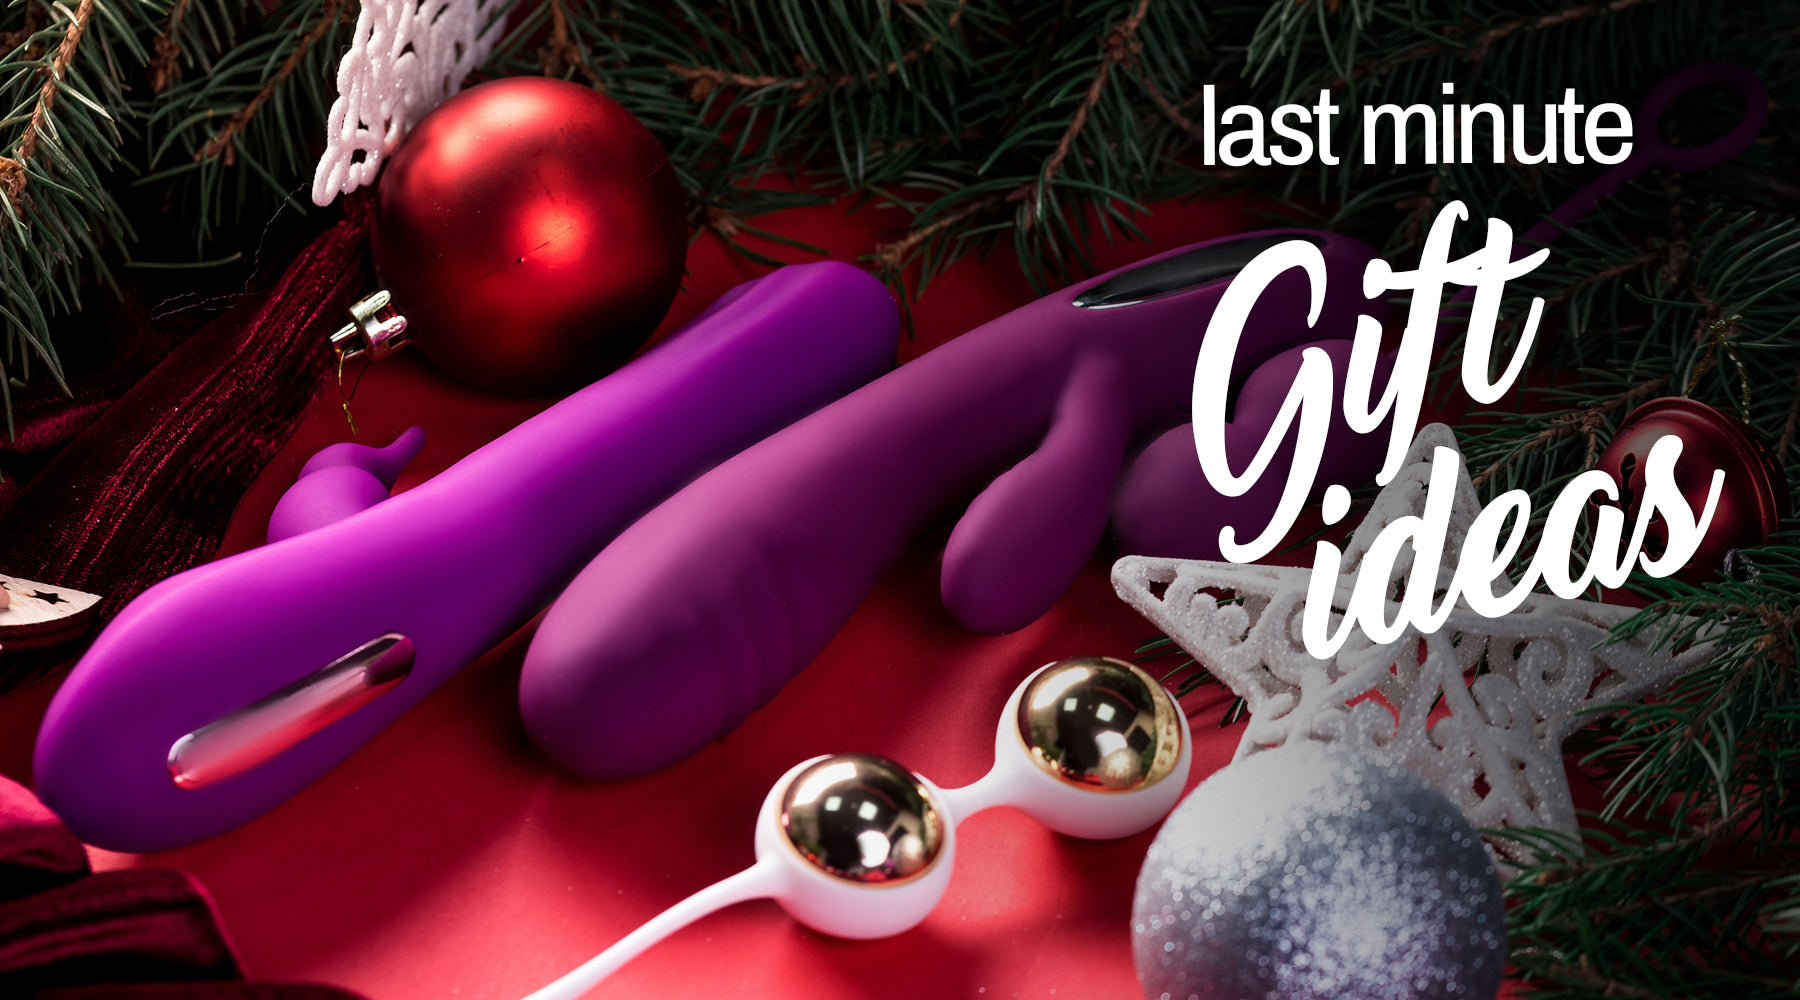 Last Minute Christmas Gift Ideas - Sexynews #68